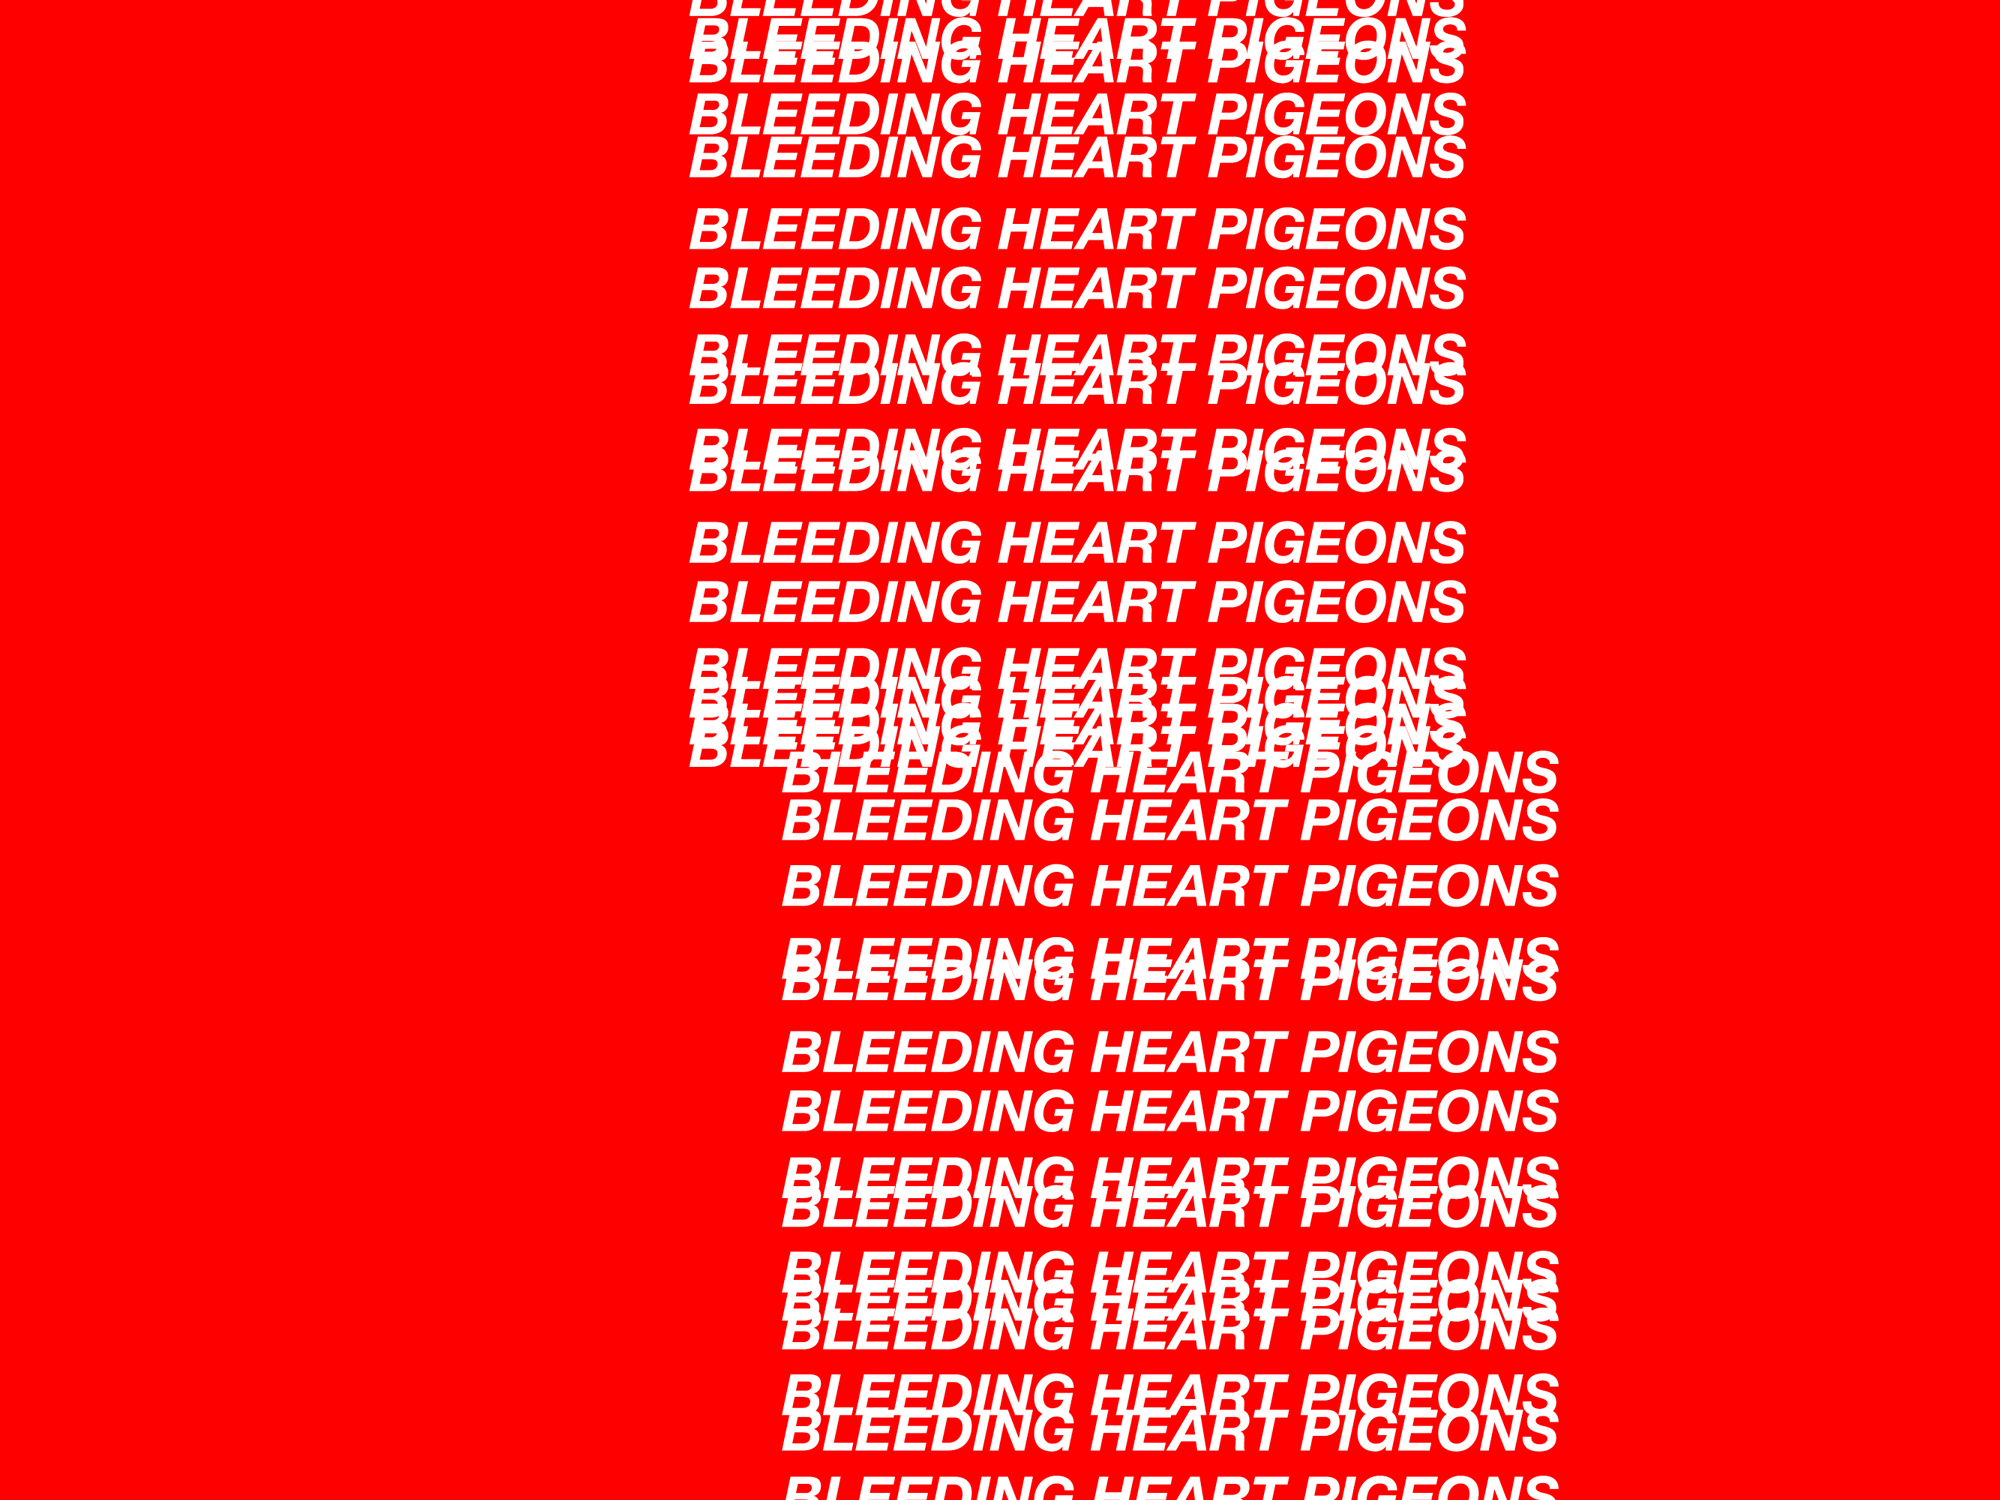 Cover image: Bleeding Heart Pigeons ‘Stir’